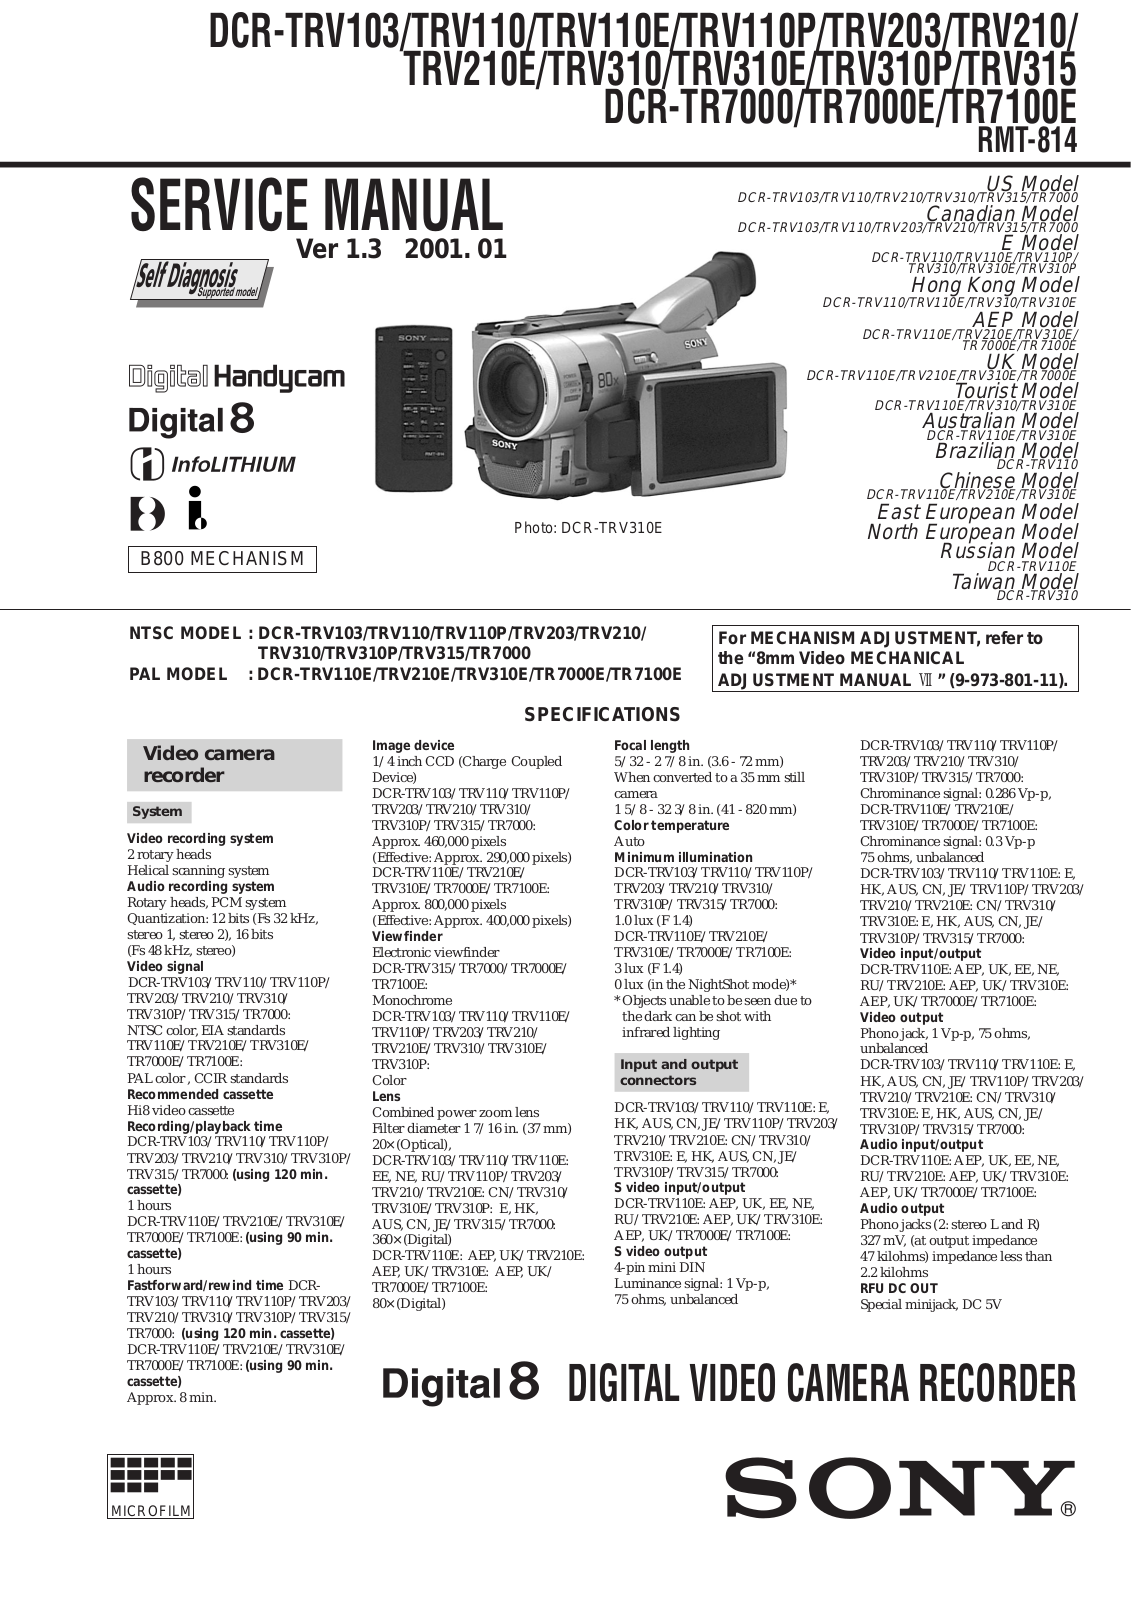 Sony DCR-TRV103, DCR-TRV110, DCR-TRV110E, DCR-TRV110P, DCR-TRV203 Service manual